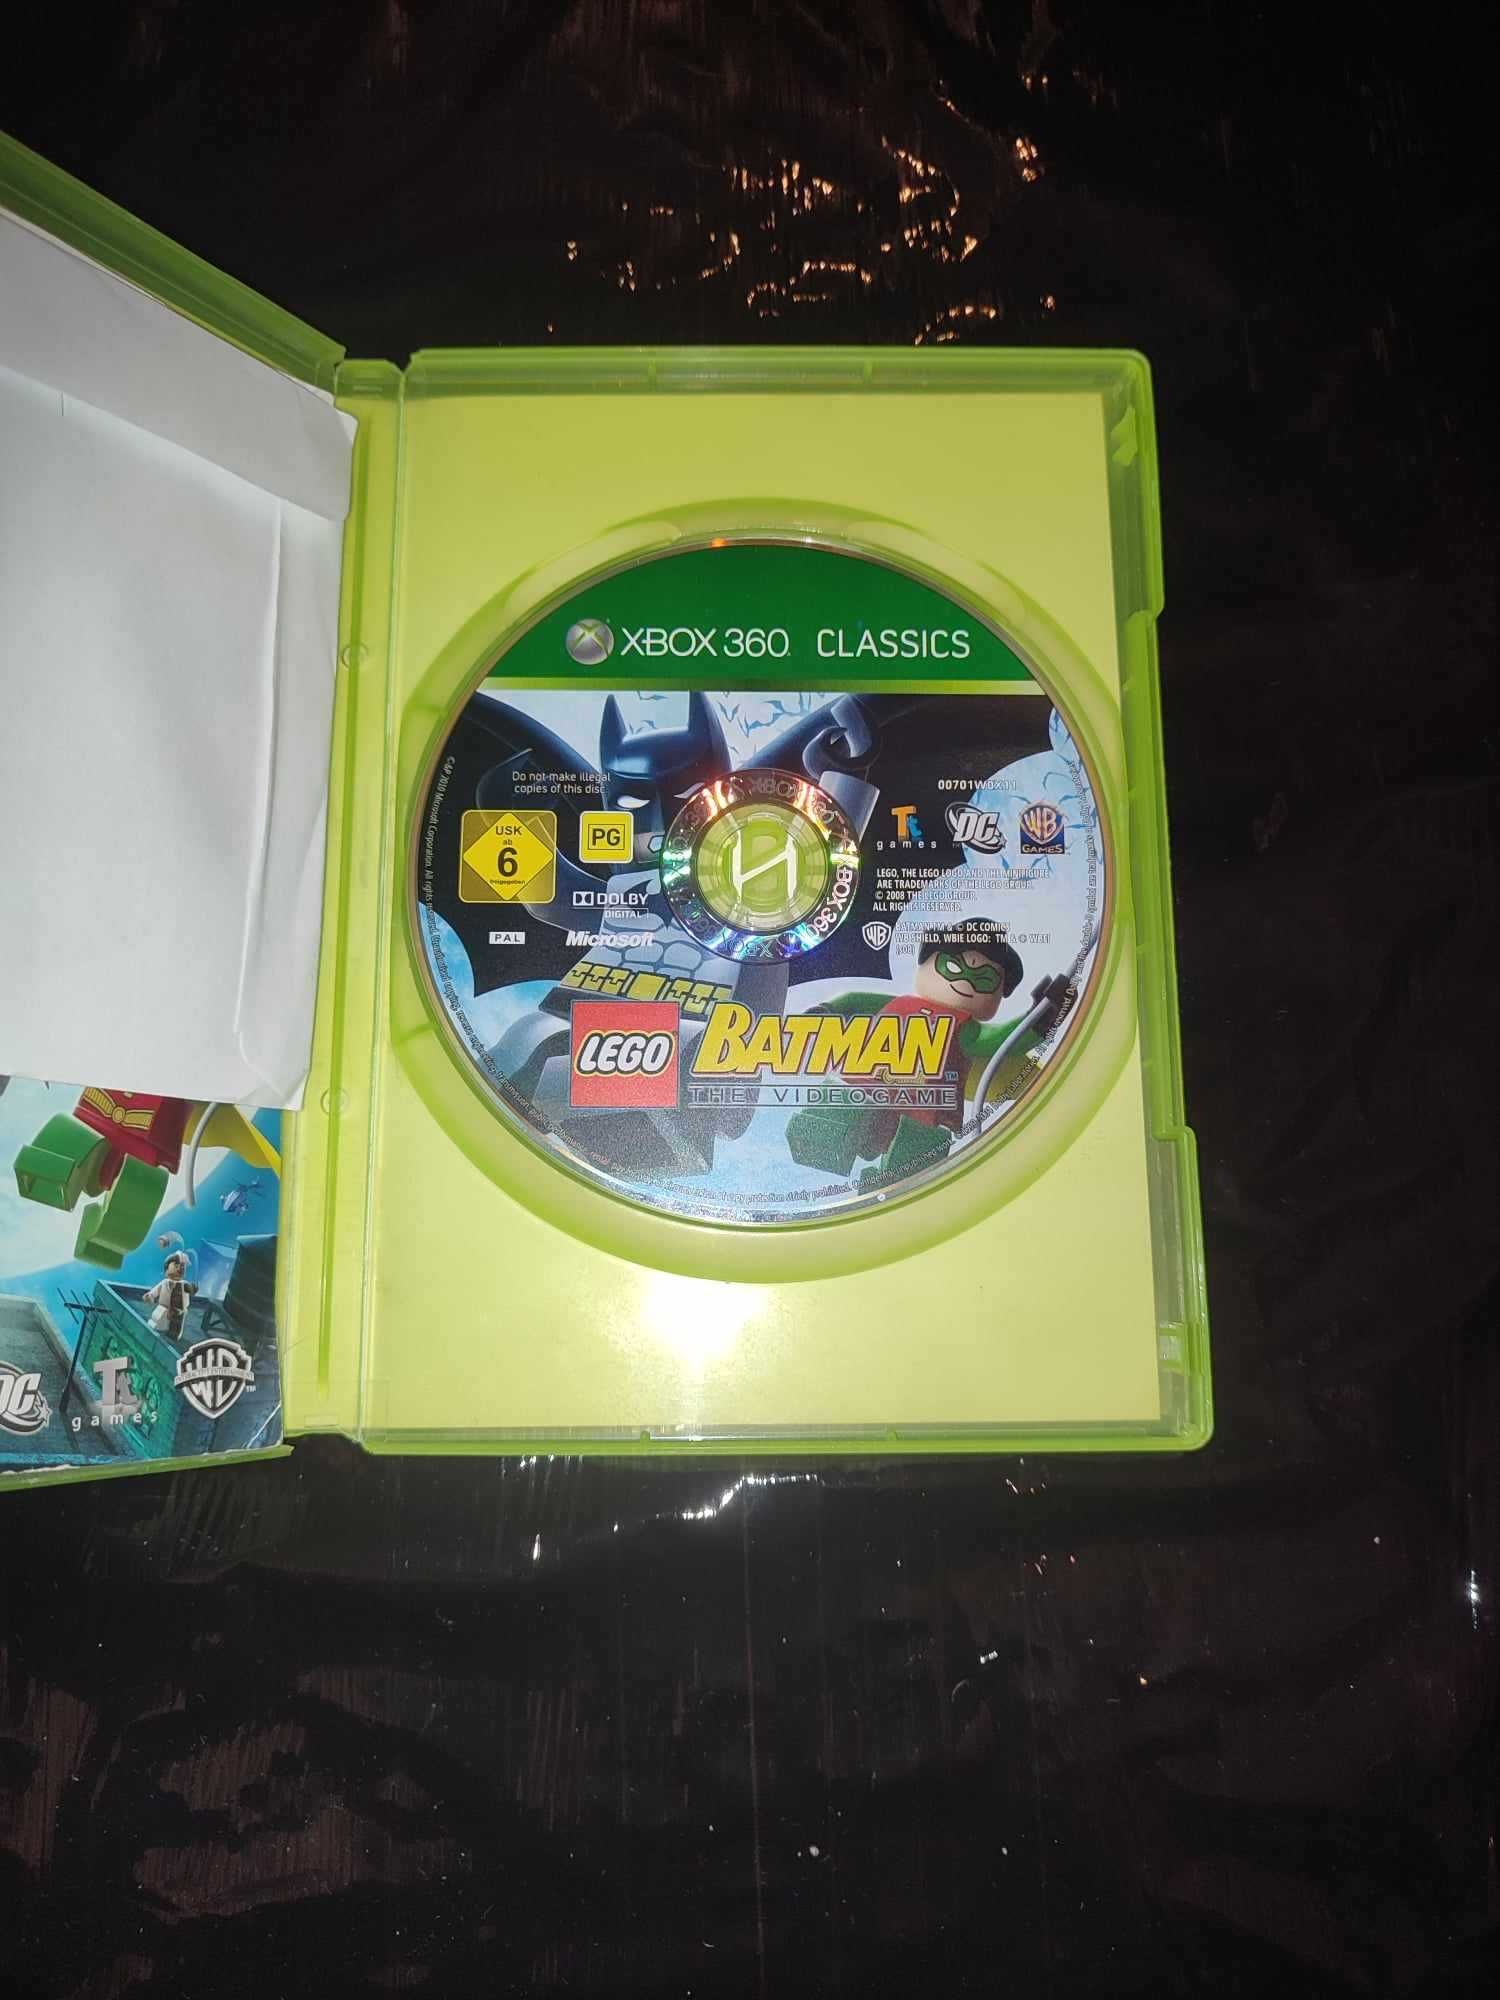 Okazja!!! Gra Lego Batman na Xbox 360 !!! Polecam!